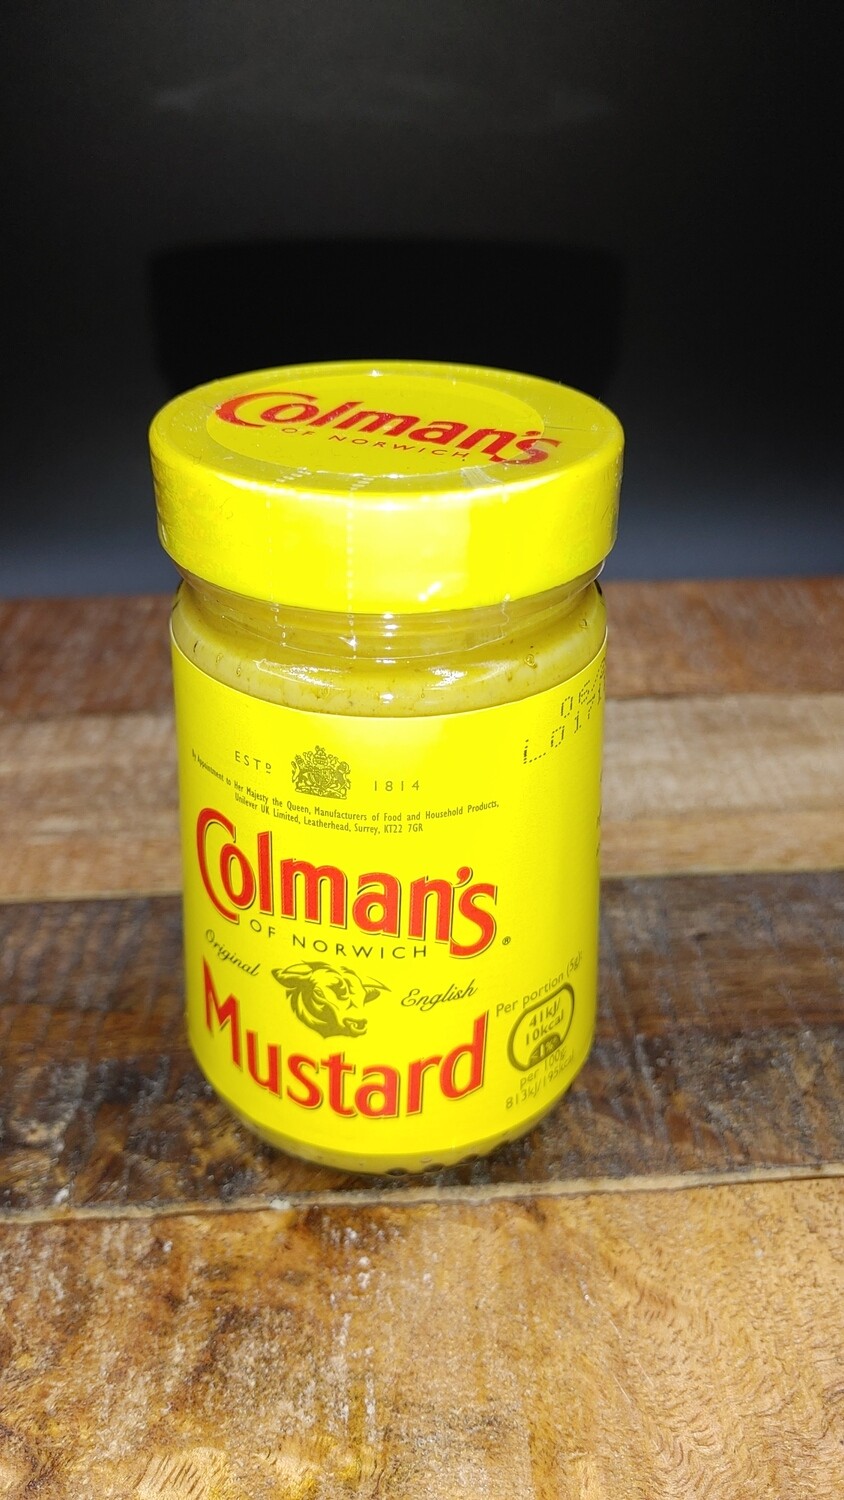 Colman's Mustard 170g